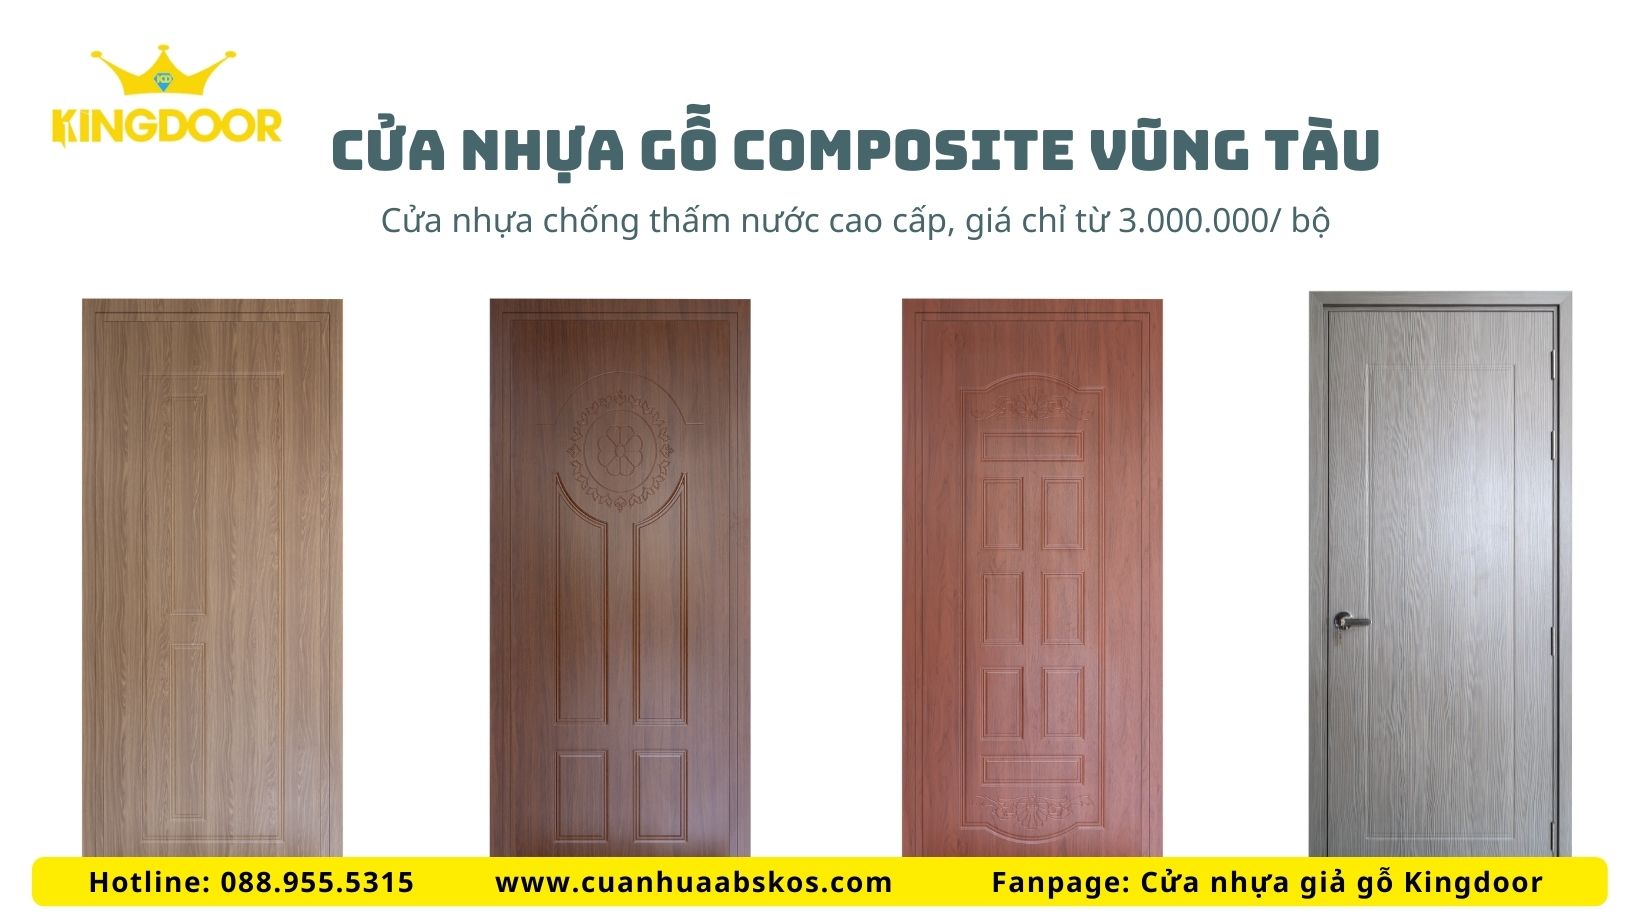 Cửa nhựa gỗ Composite Vũng Tàu